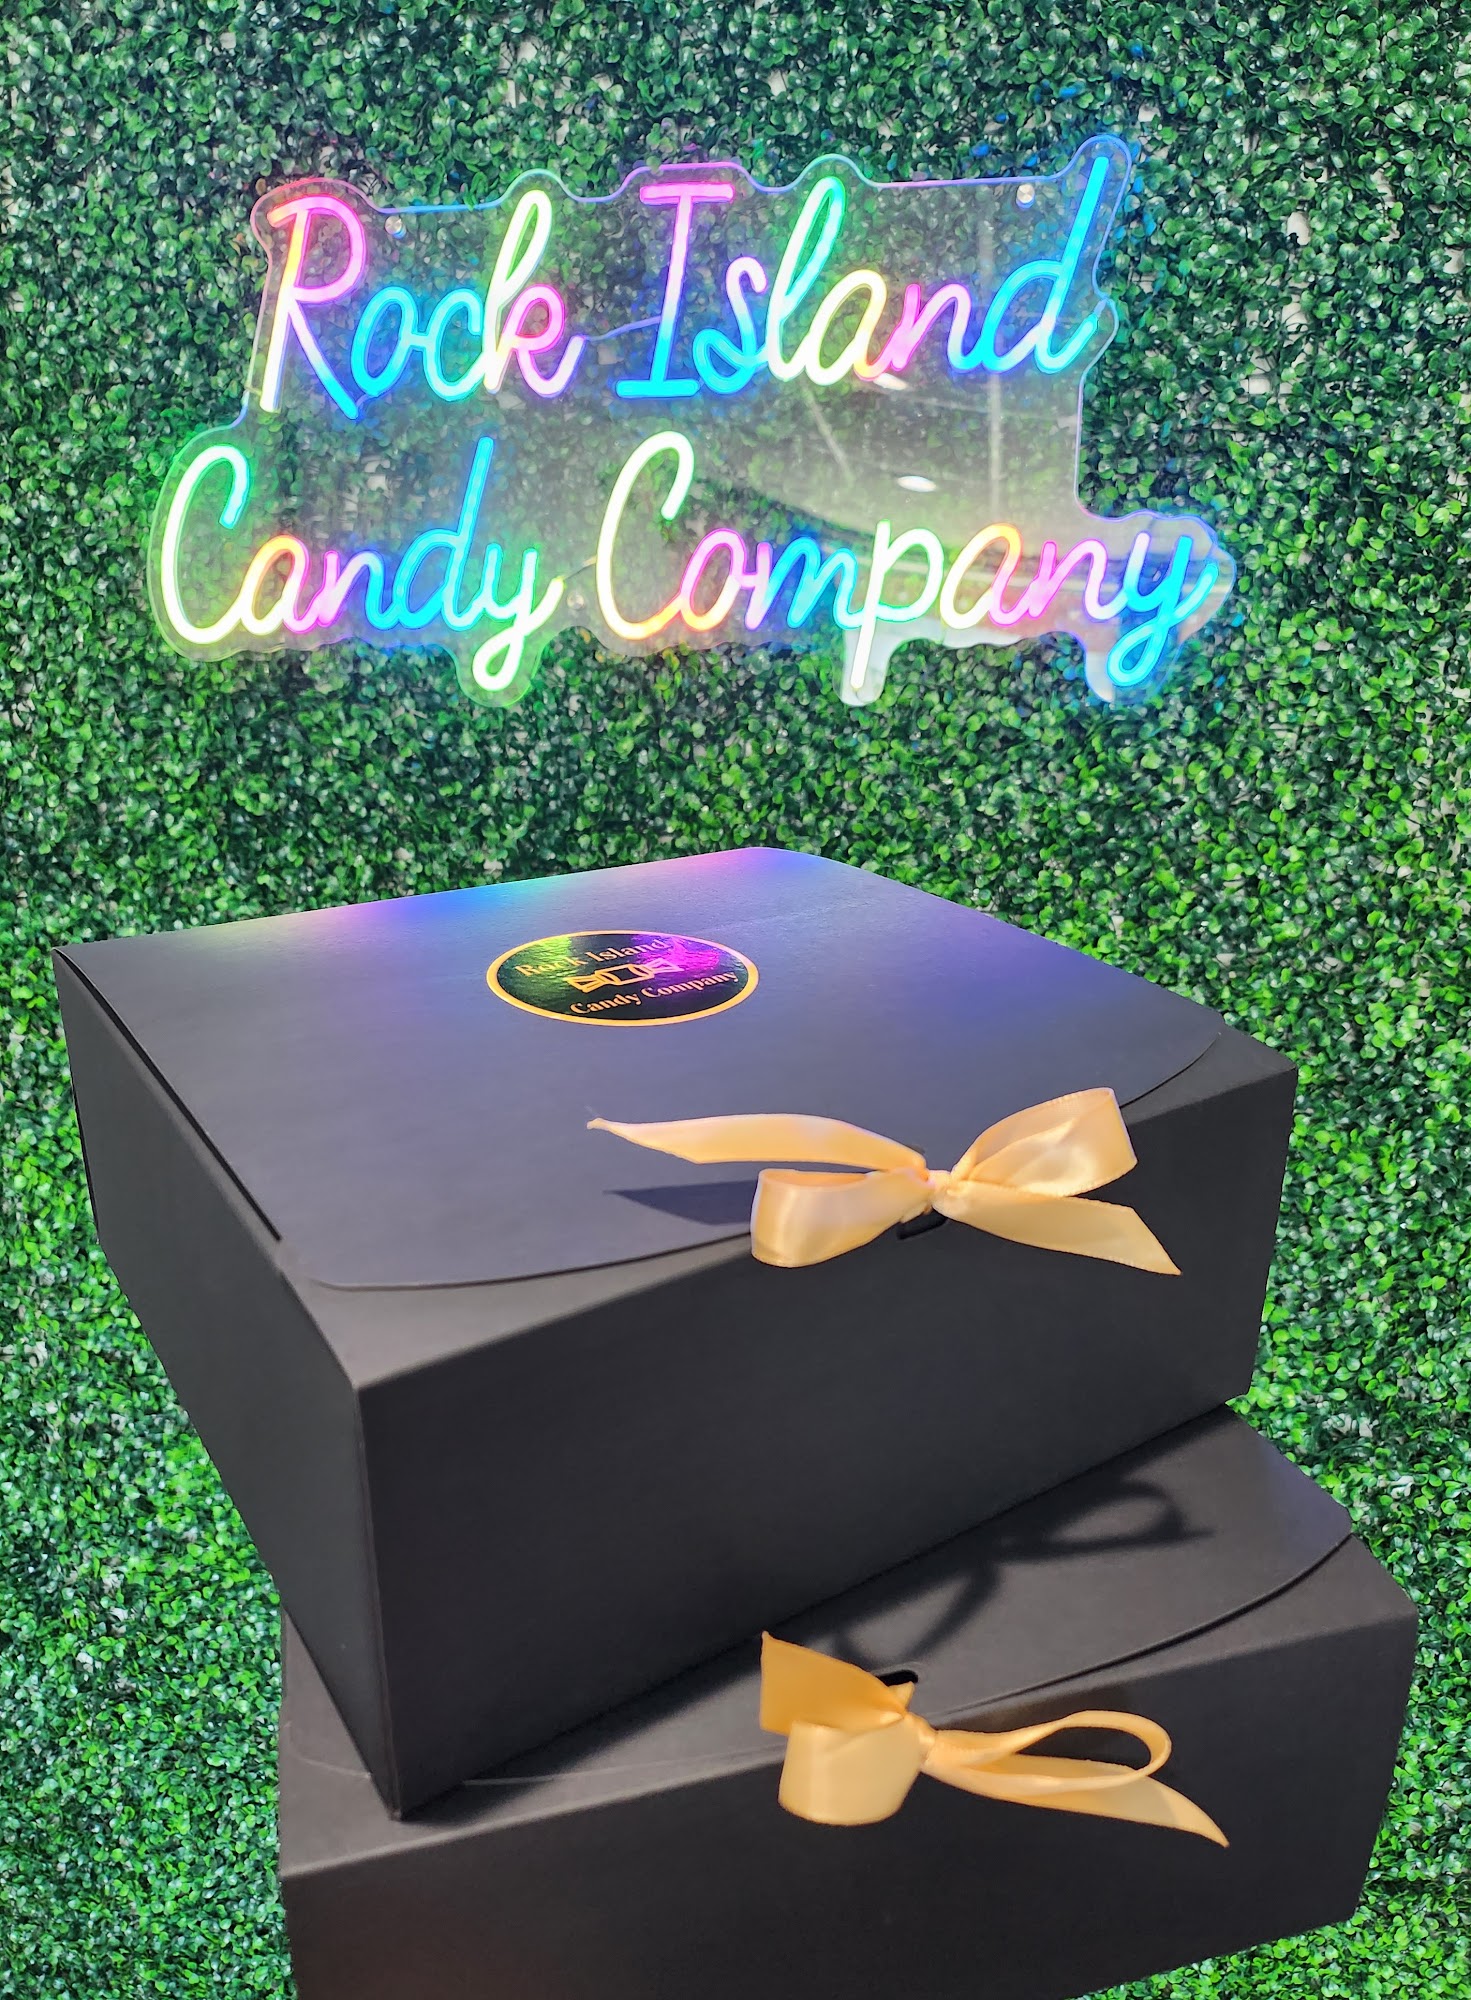 Rock Island Candy Company